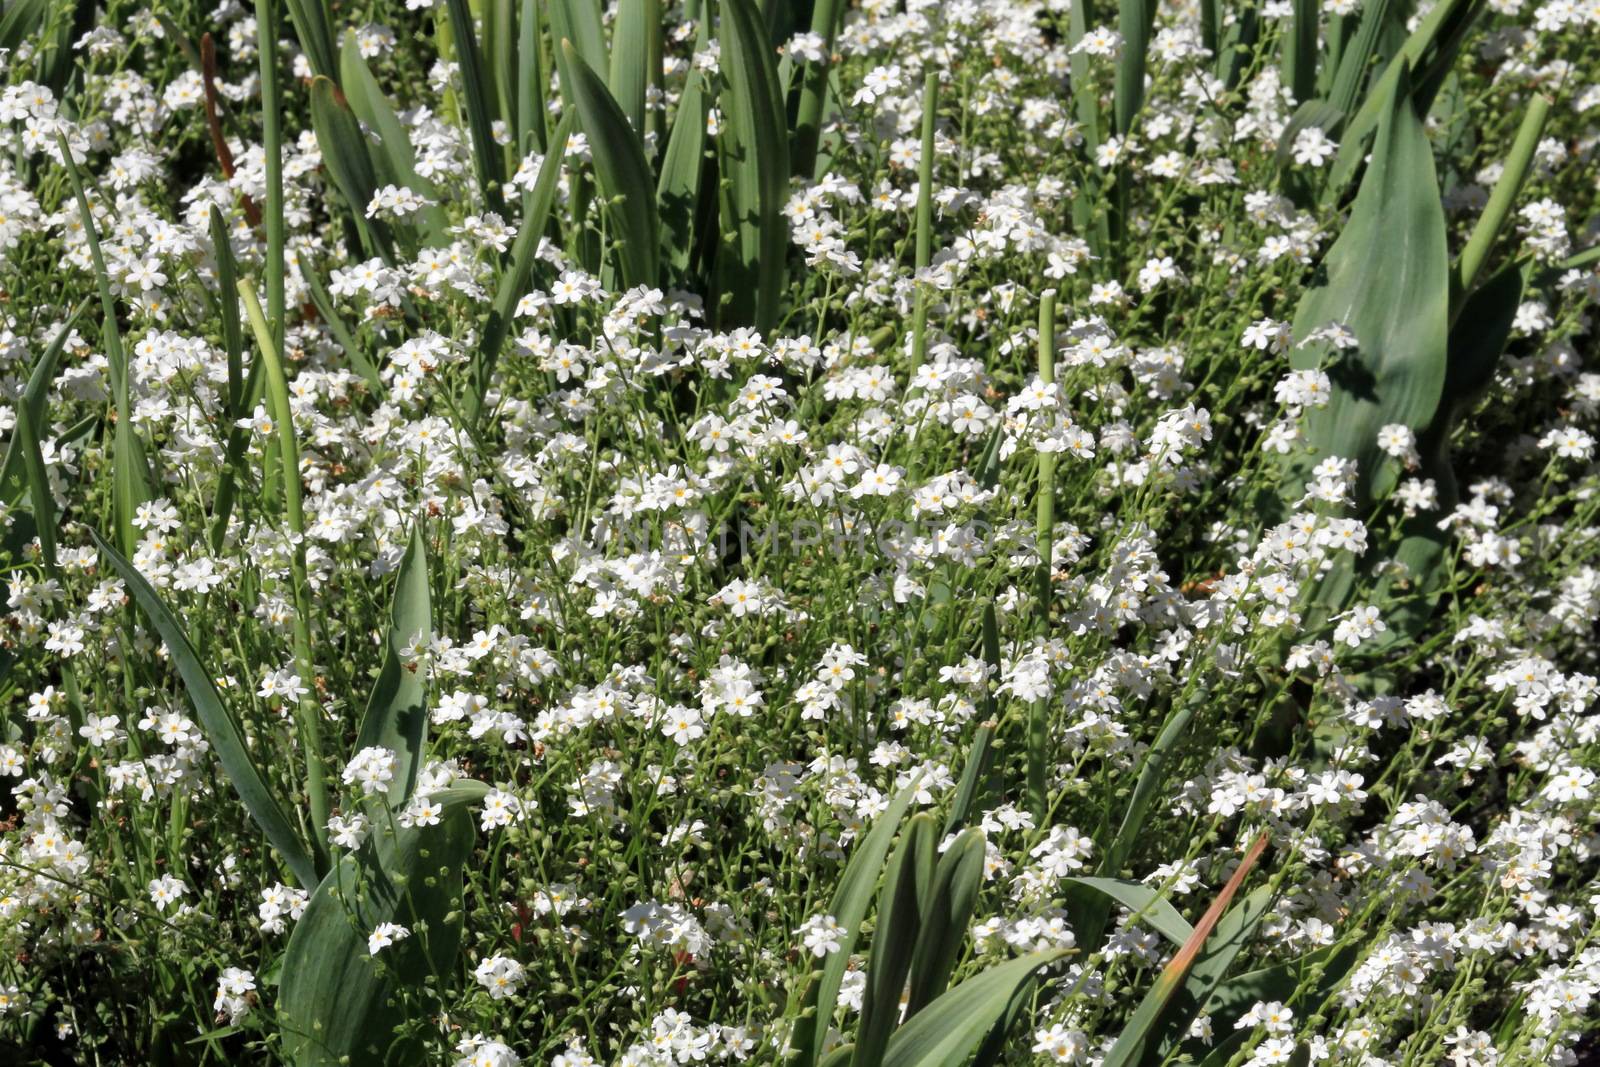 Many myosotis flowers as a background